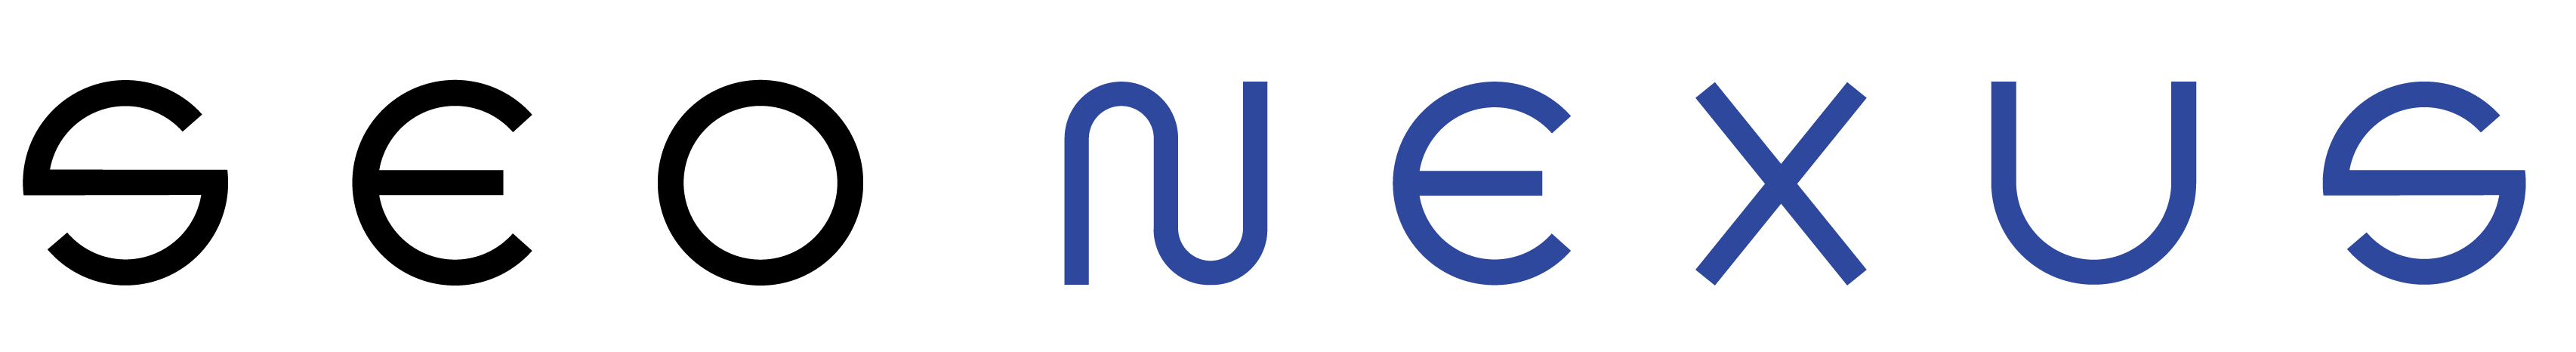 Best Online Marketing Firm Logo: SEO Nexus